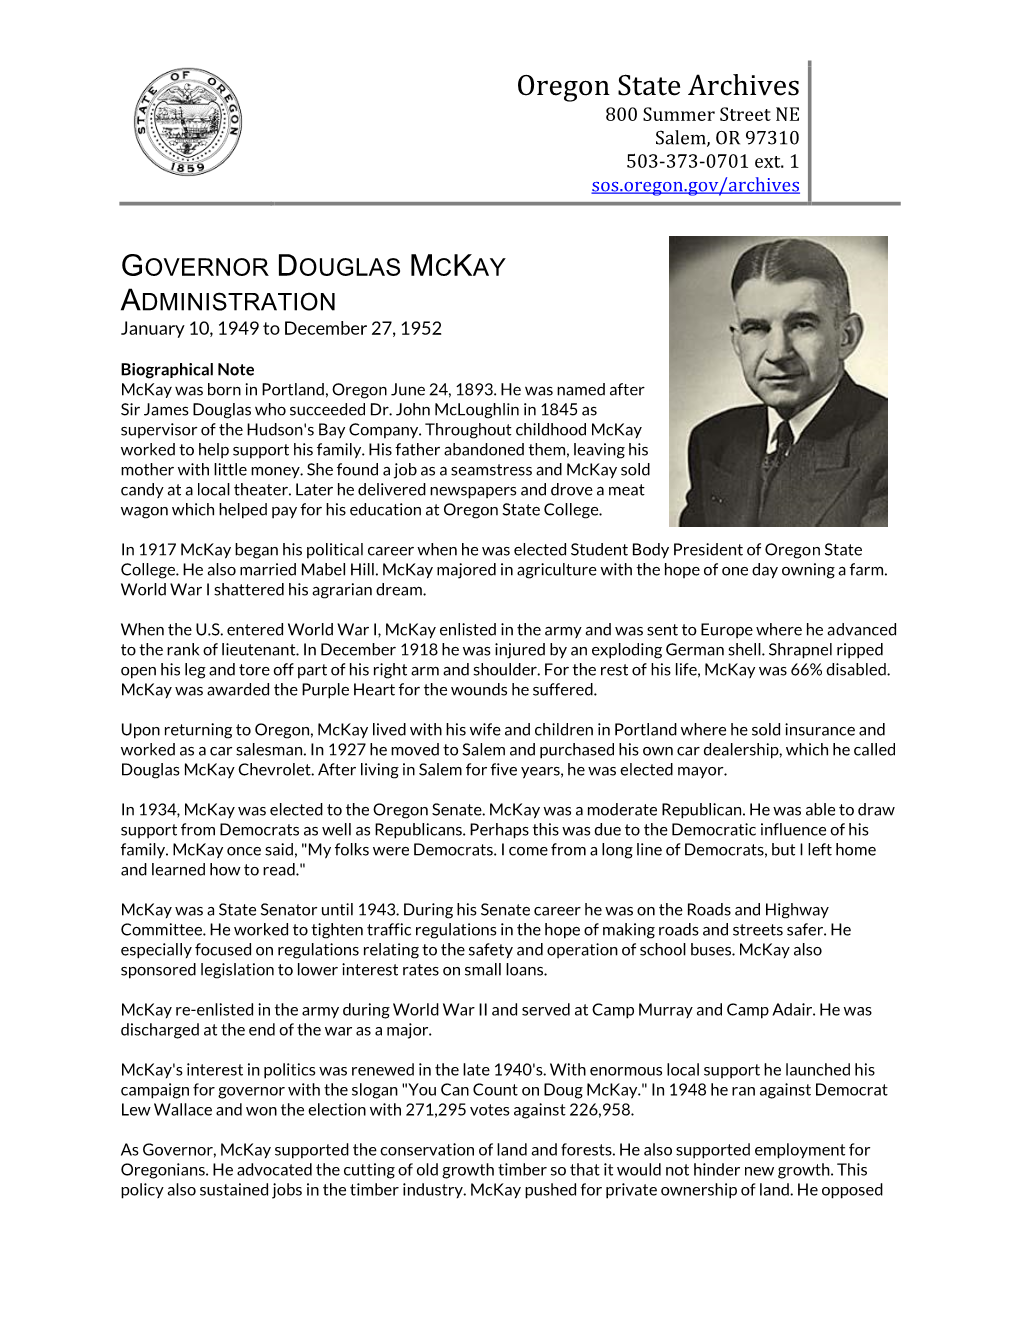 Governor Douglas Mckay's Administration